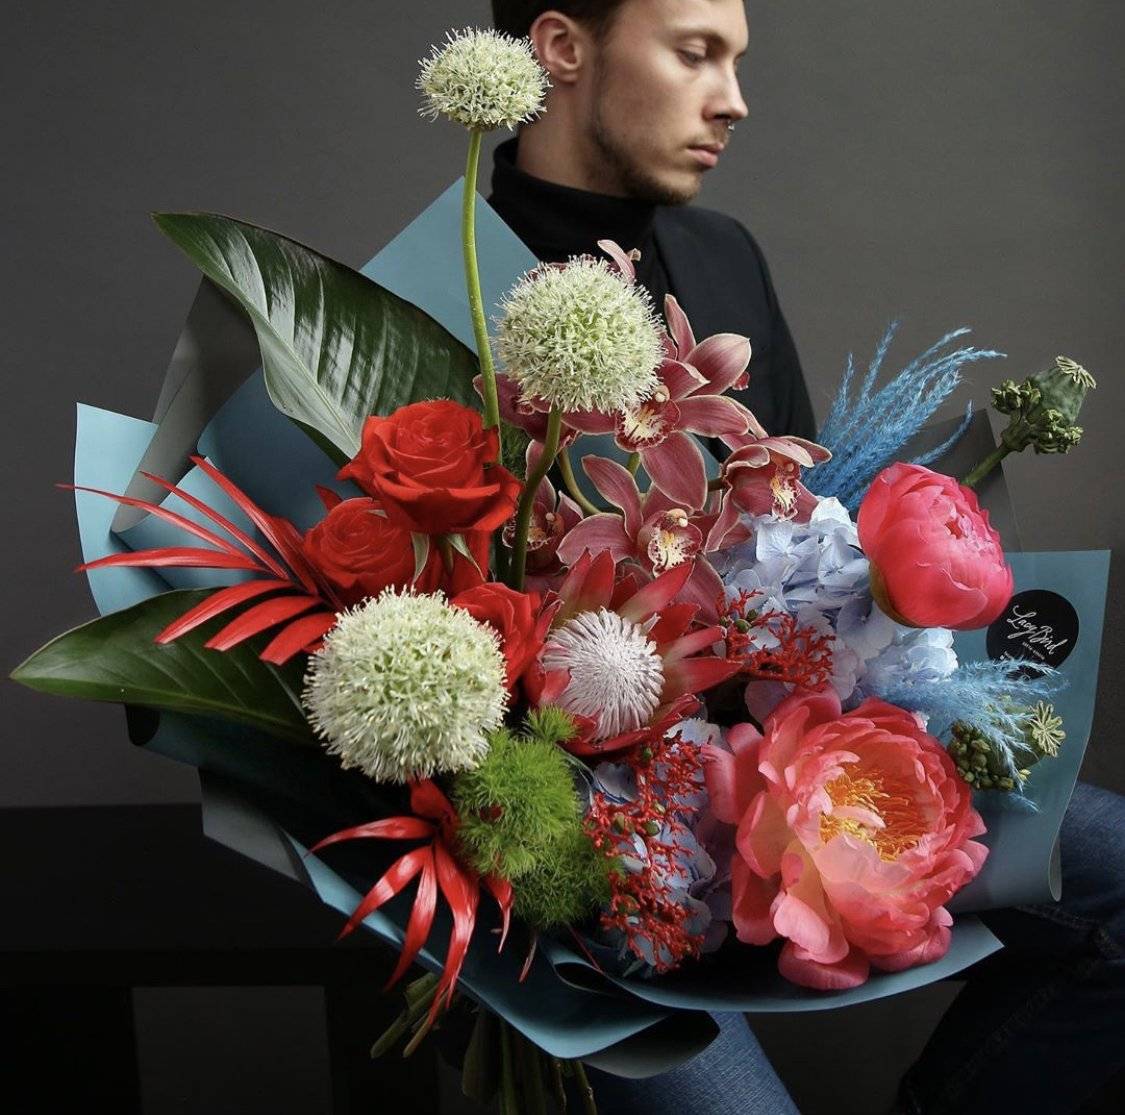 Какие цветы дарят мужчинам — на дни рождения и другие торжества
какие цветы дарят мужчинам — на дни рождения и другие торжества